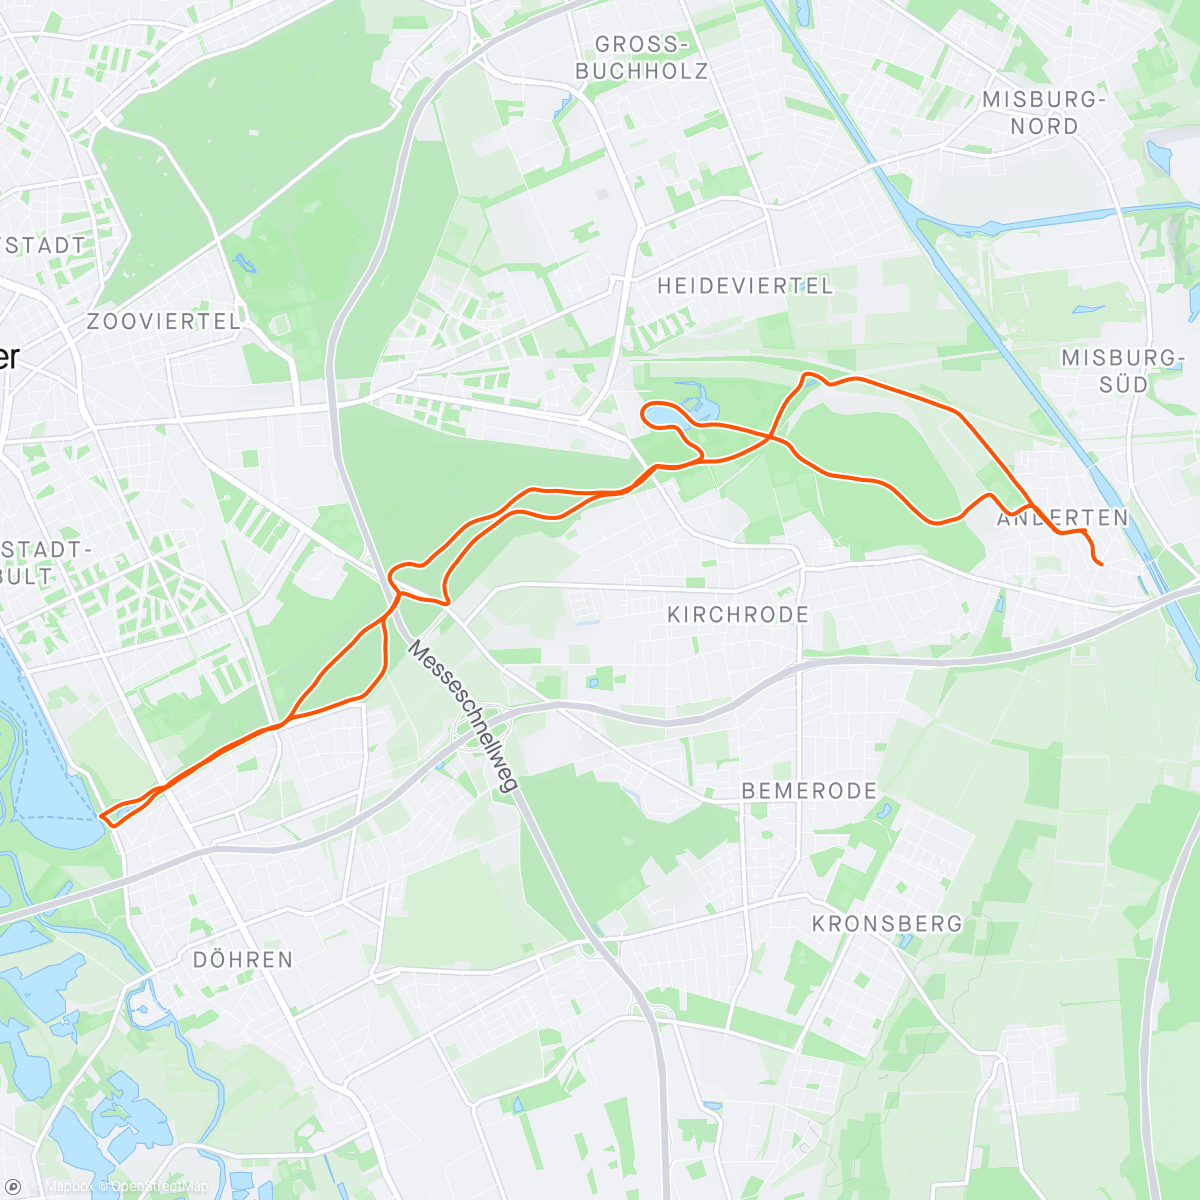 「Wanderung durch Hannover」活動的地圖